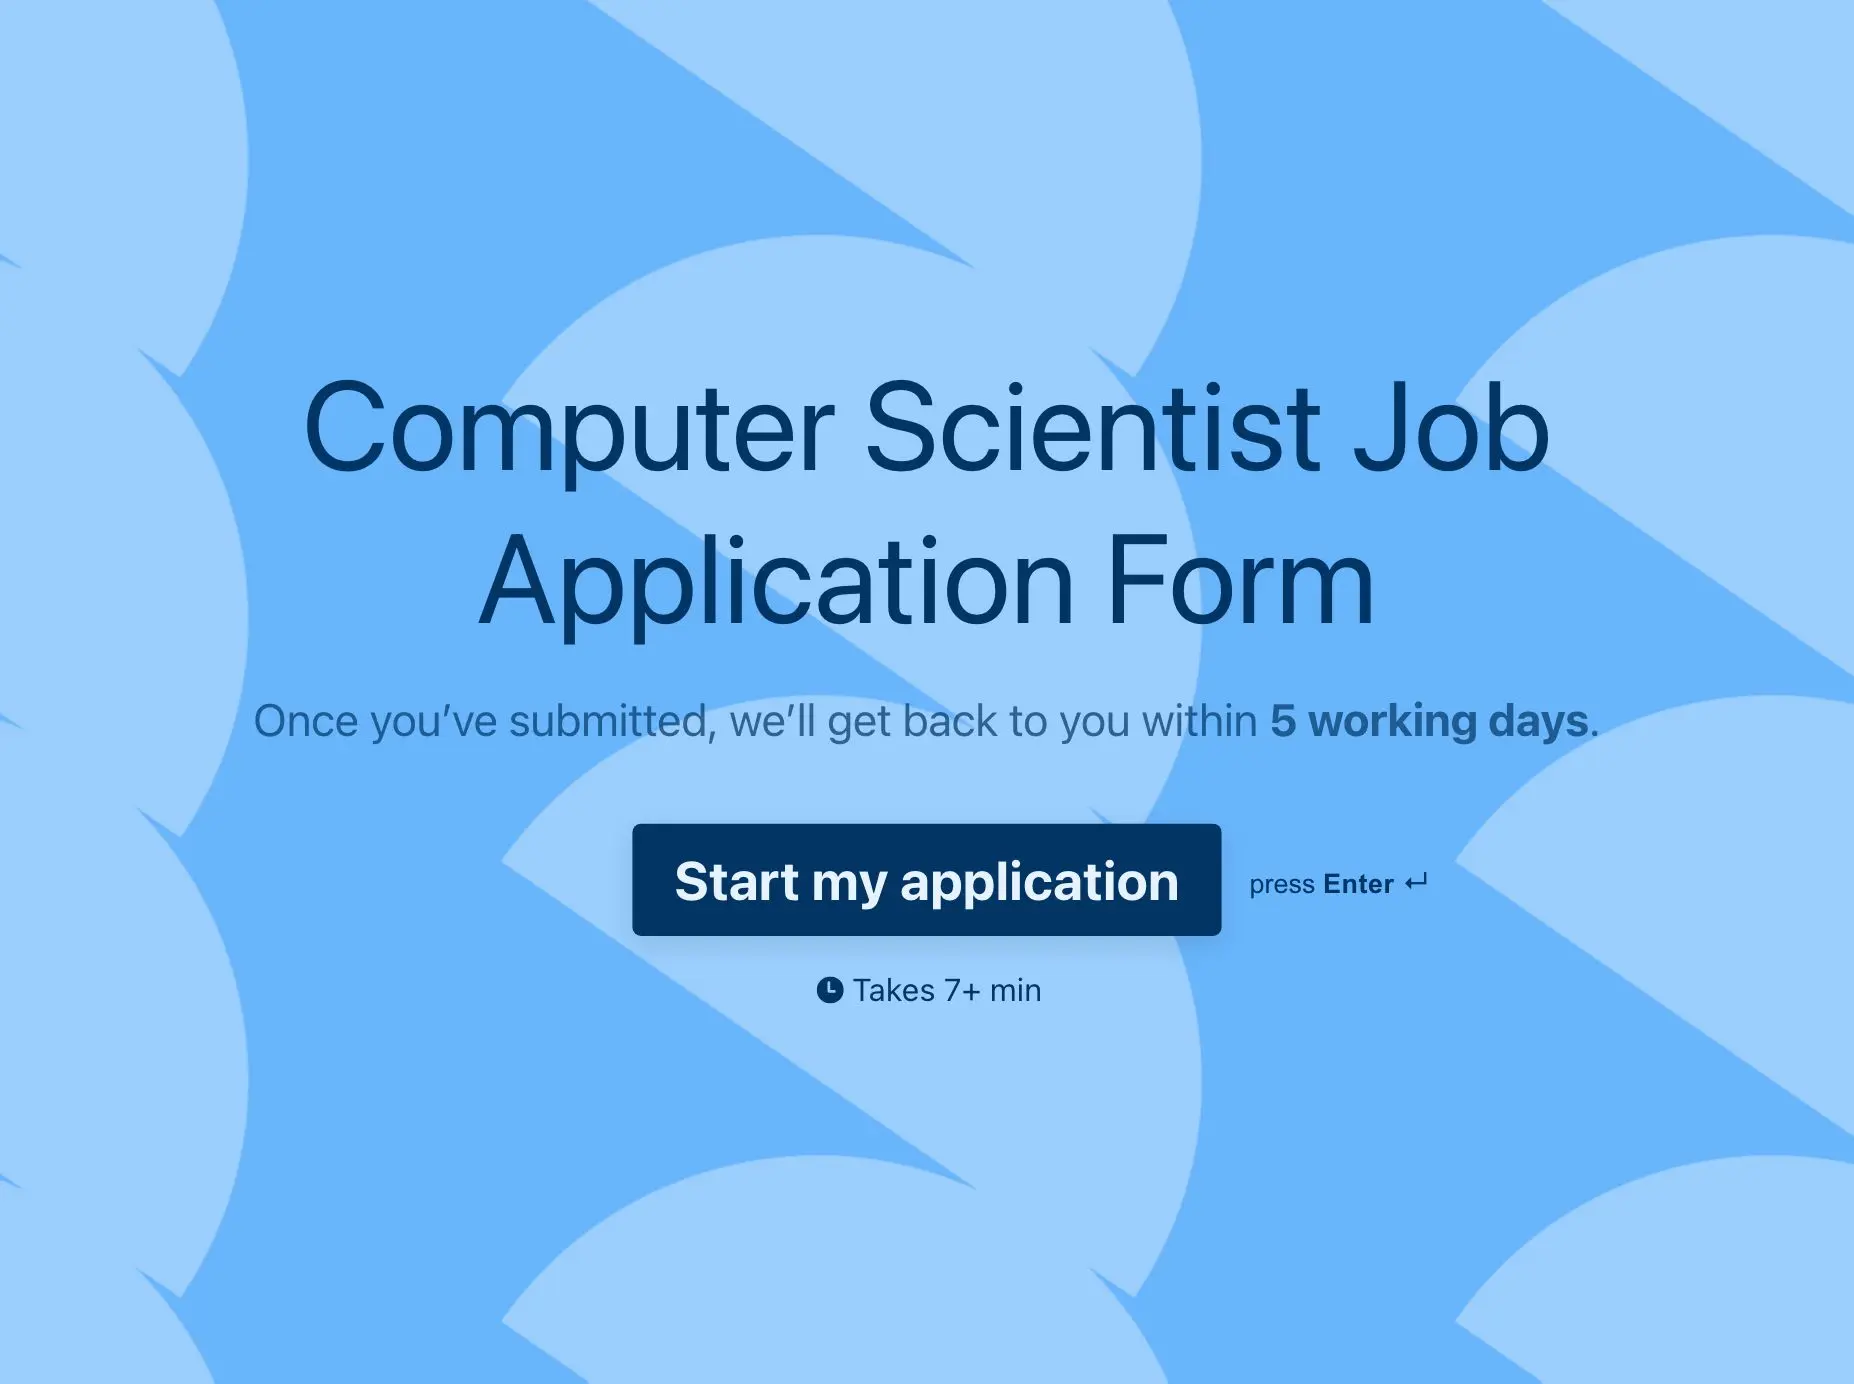 Computer Scientist Job Application Form Template Hero